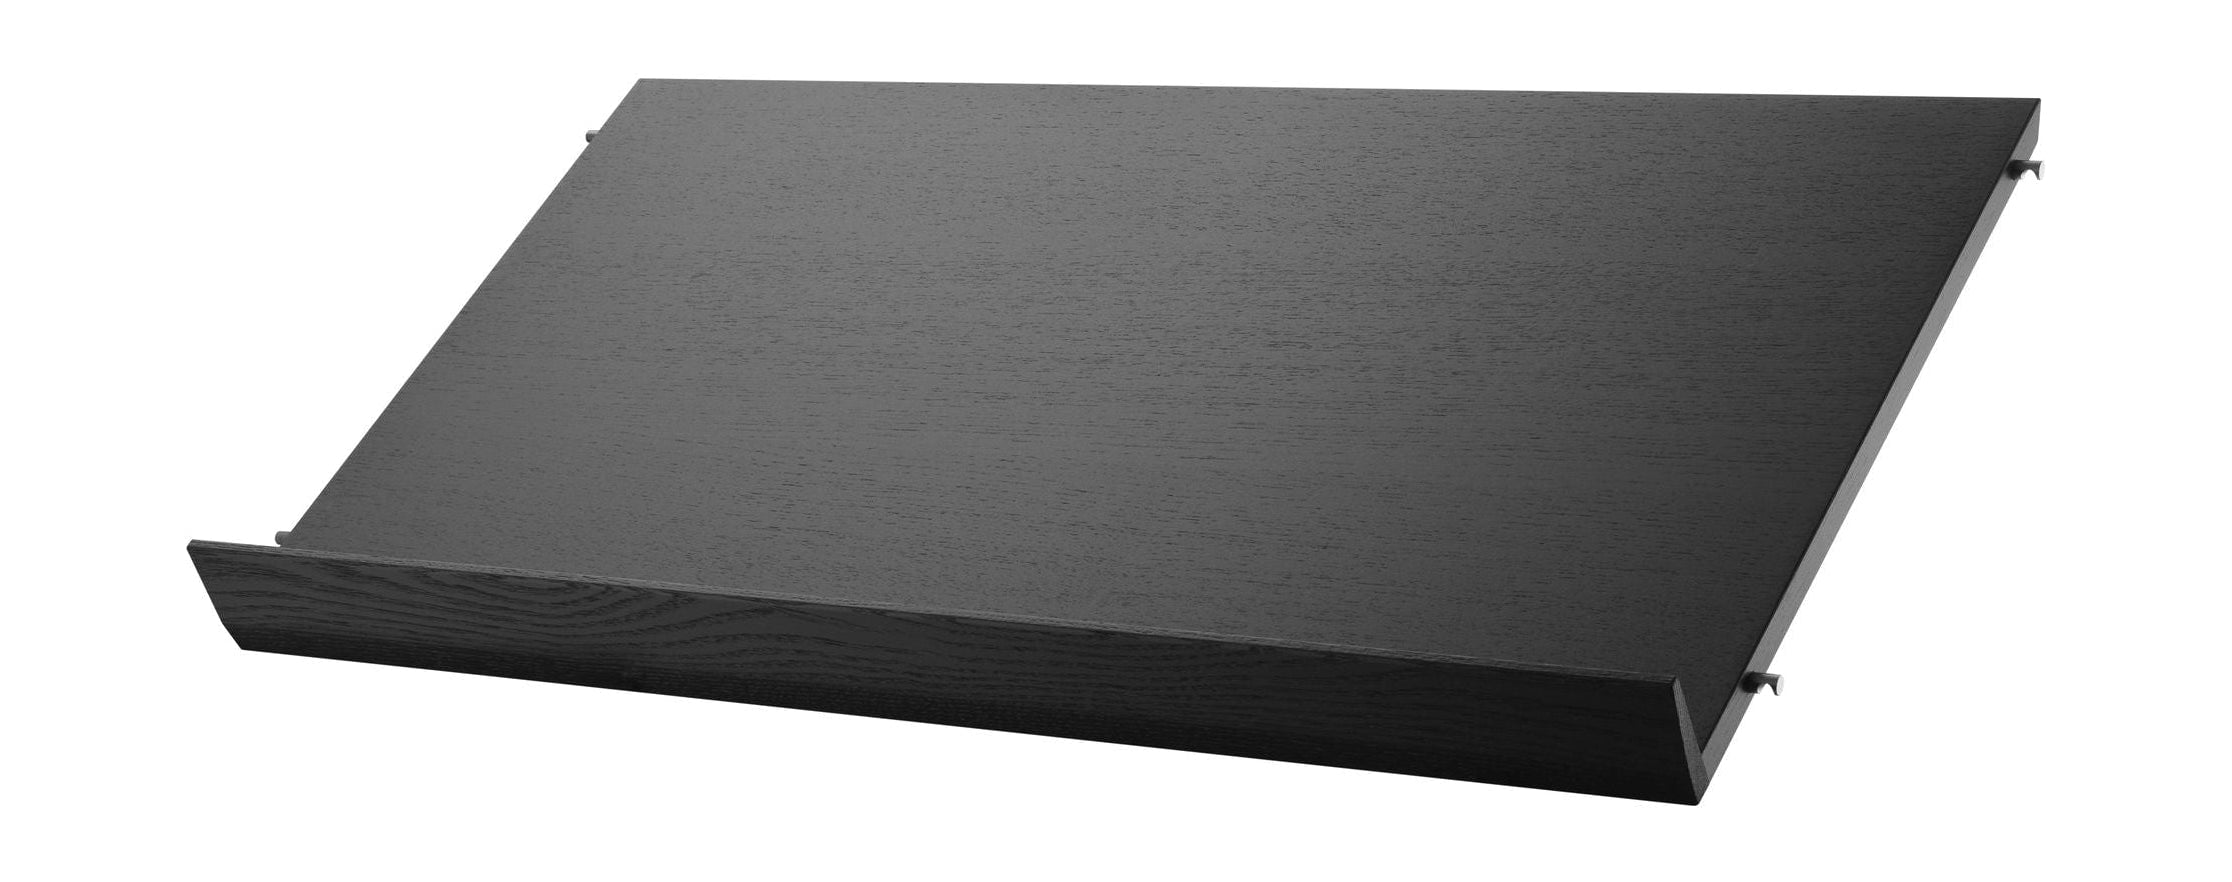 Streng møbler streng system magasin brett tre svart farget aske, 30x78 cm